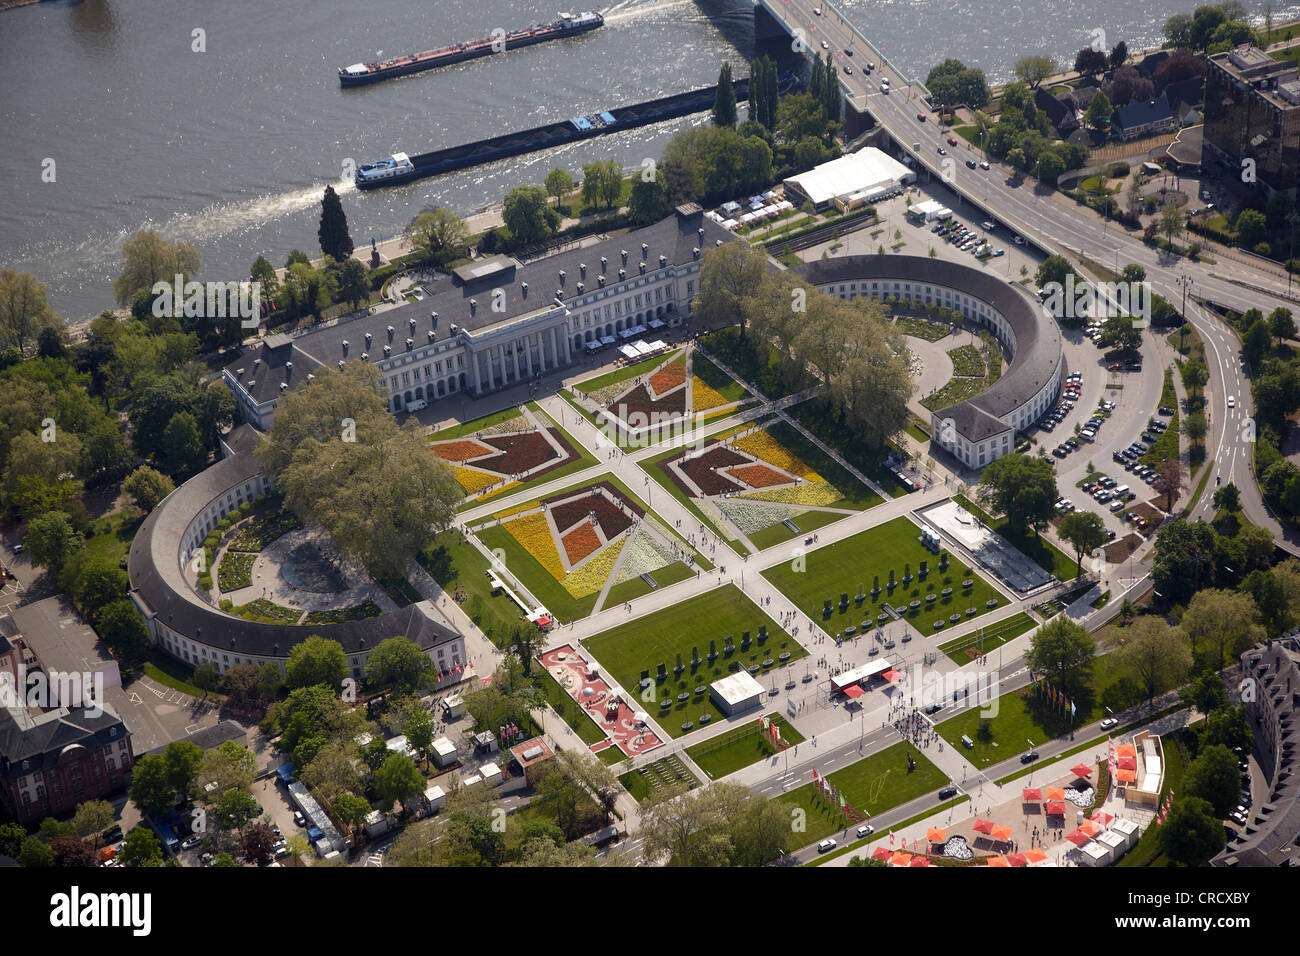 Vista aerea, Kurfuerstliches Schloss o Palazzo elettorale Koblenz, Renania-Palatinato, Germania, Europa Foto Stock